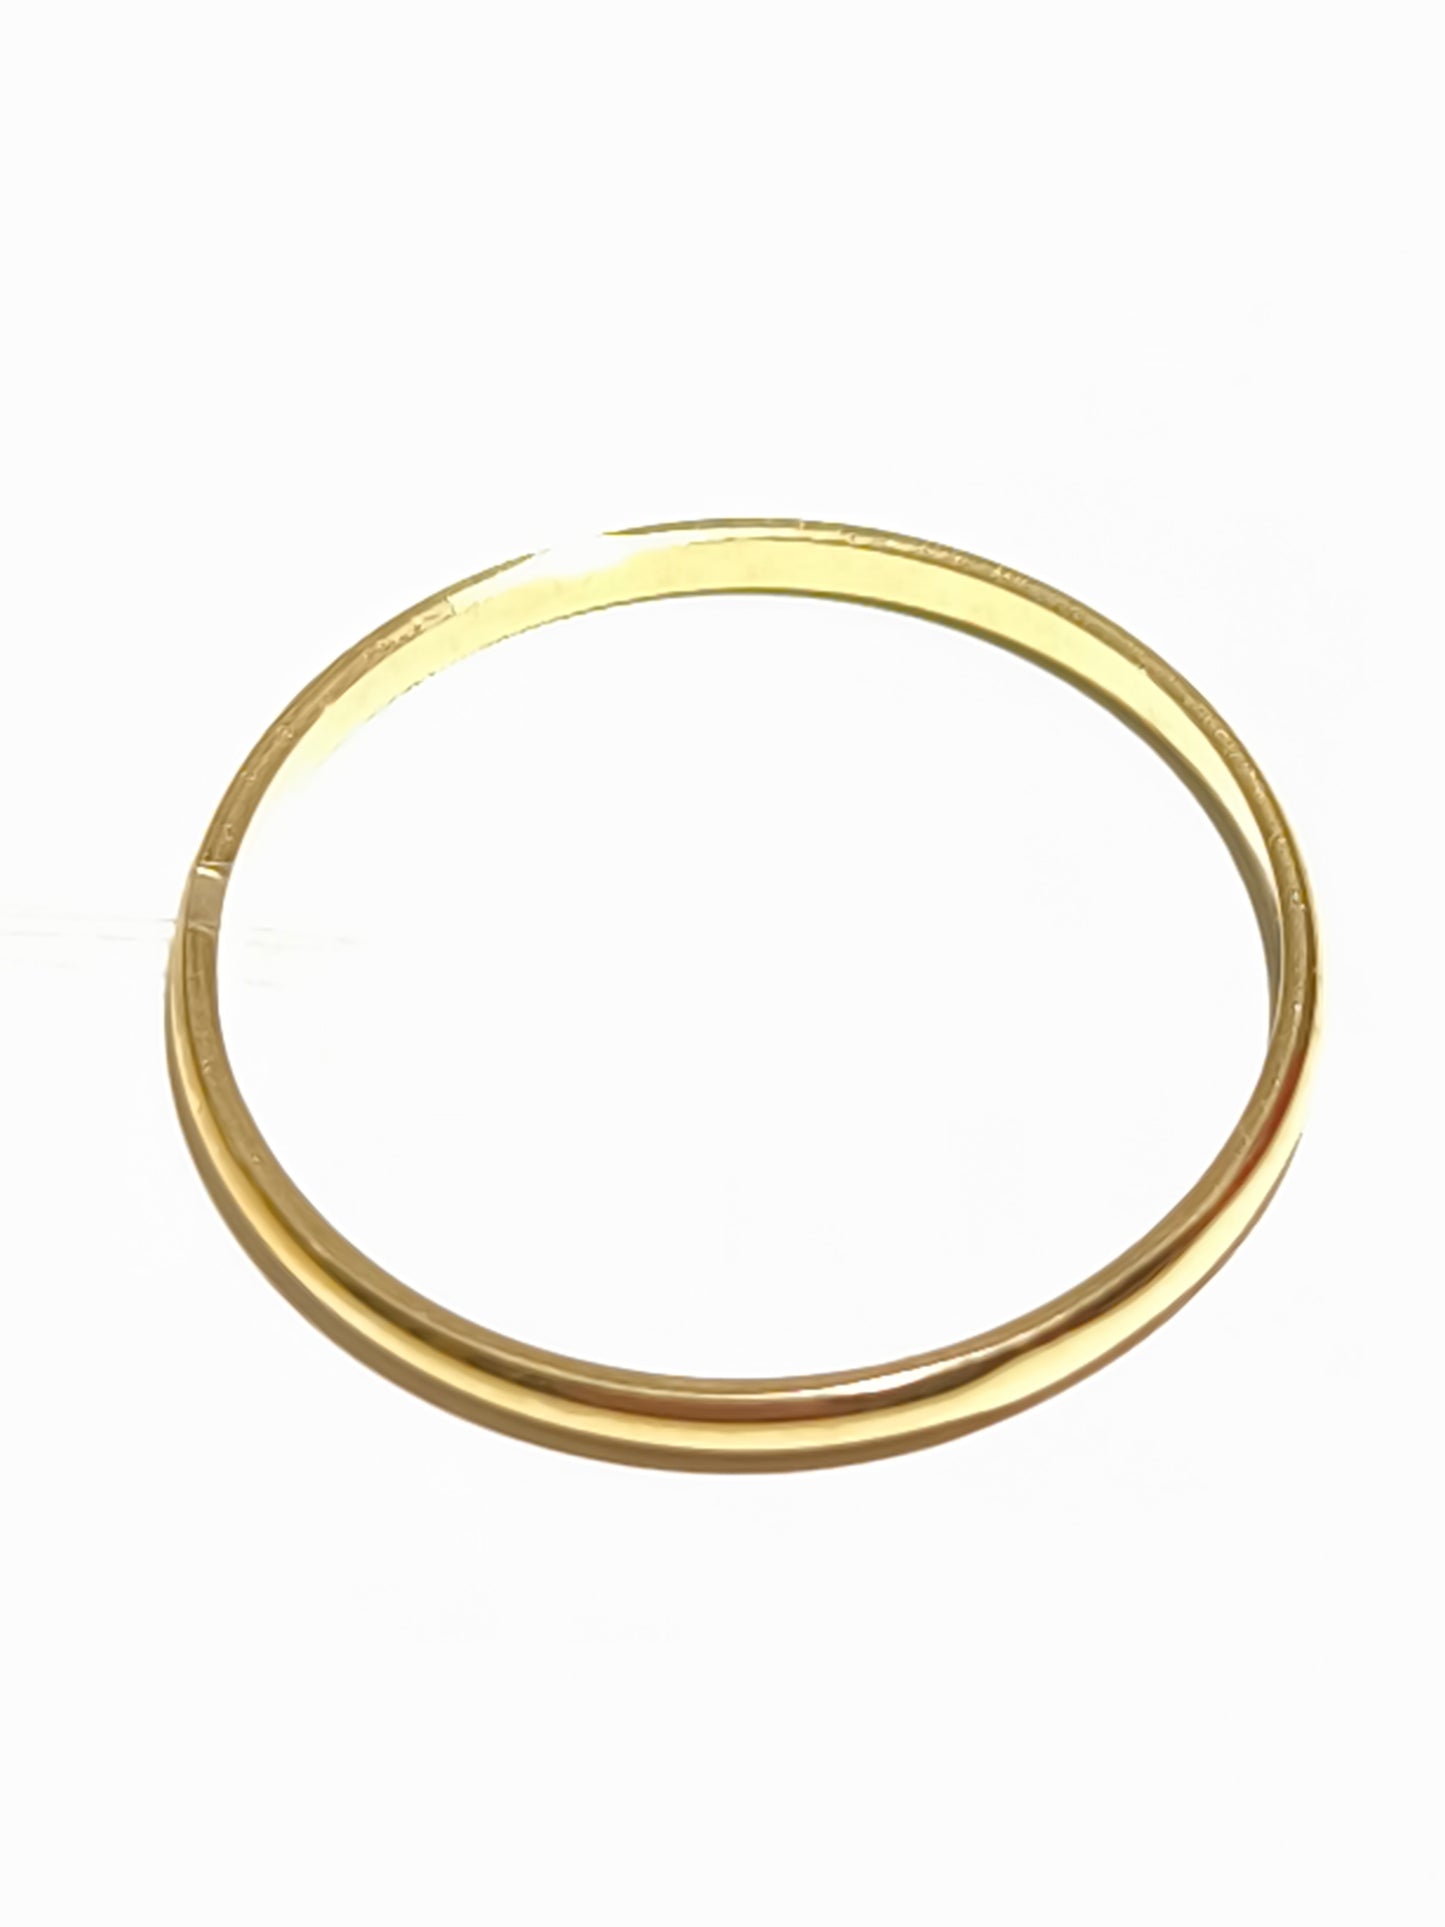 1.8mm gold wedding ring